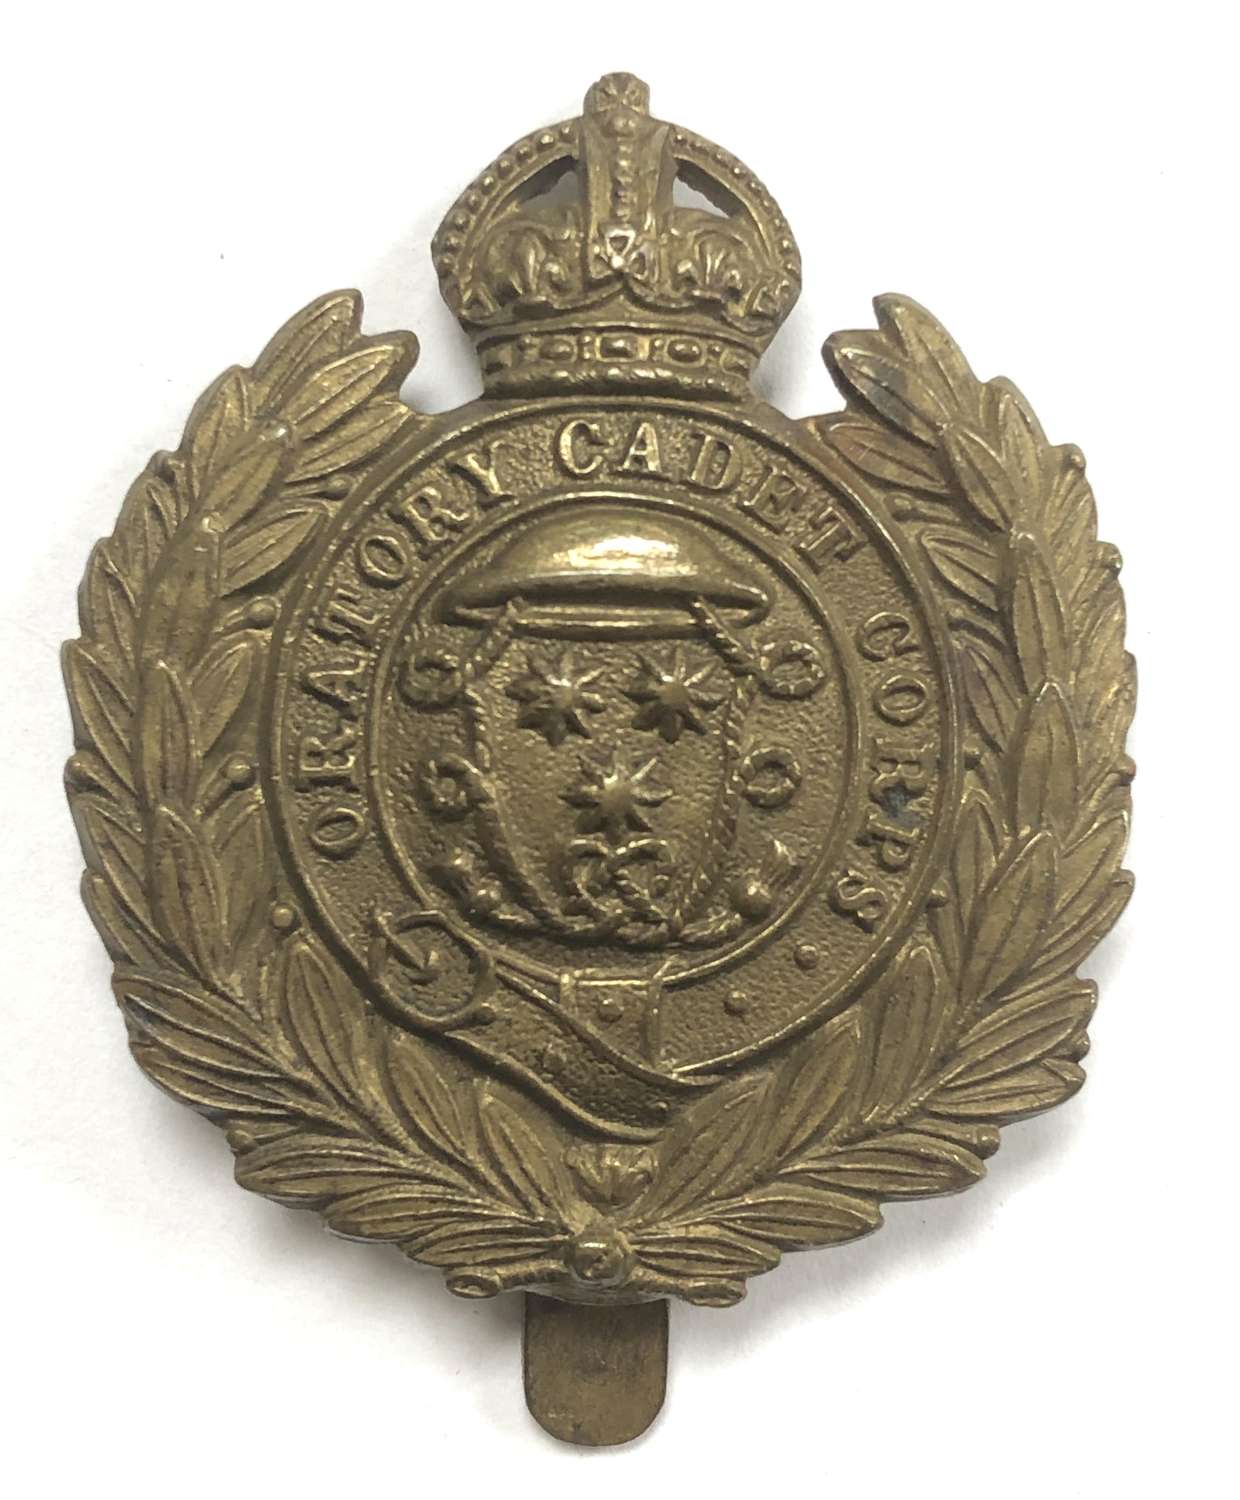 Oratory Cadet Corps brass cap badge